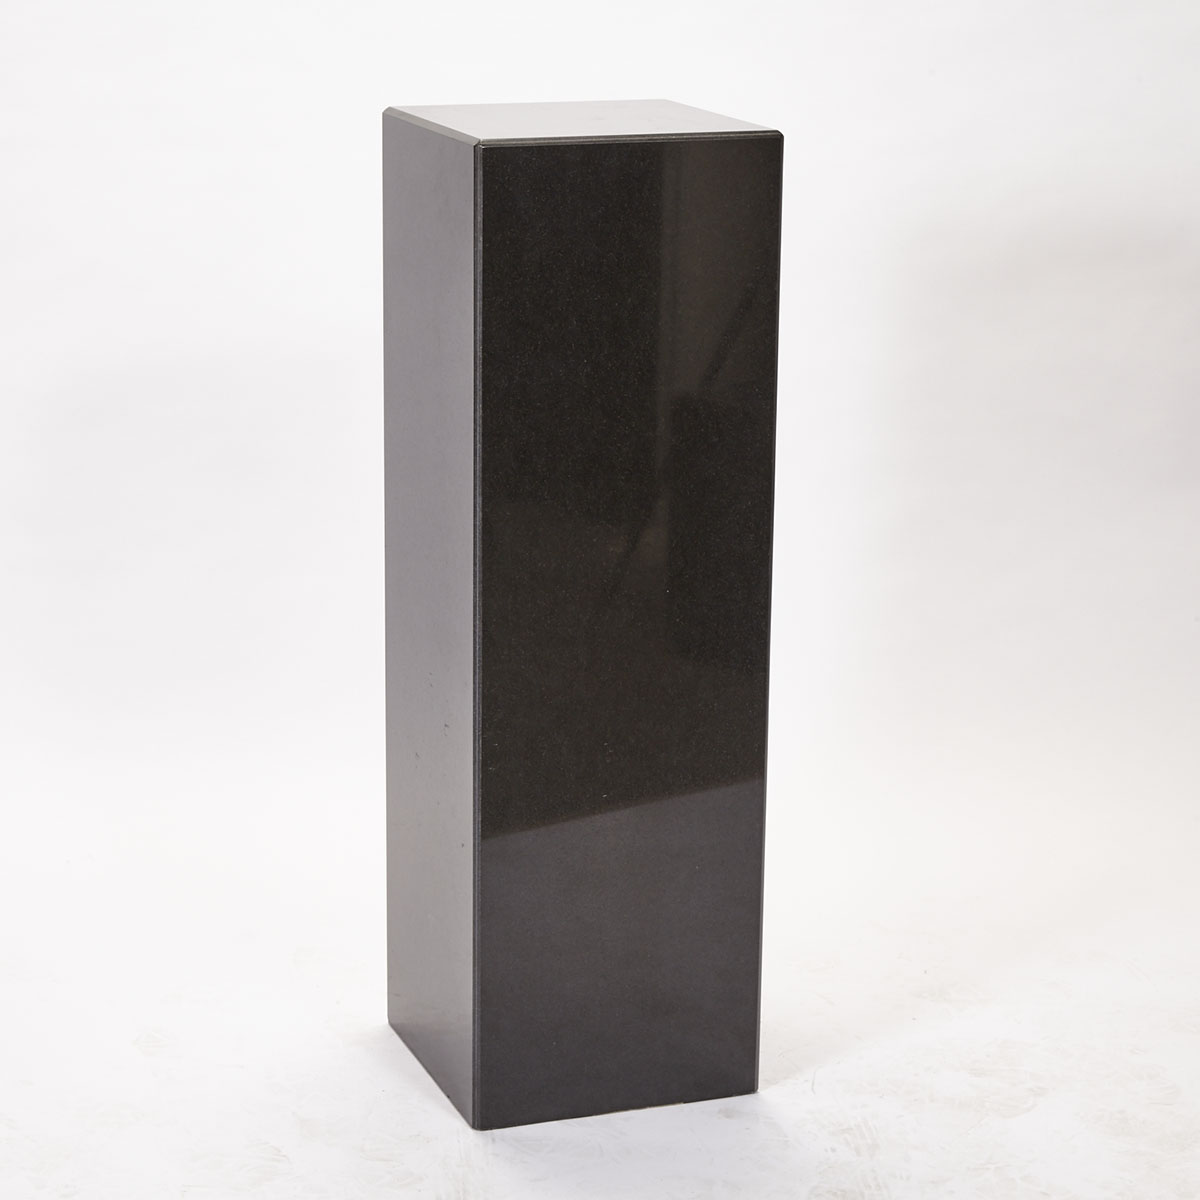 Black Granite Square Column Form Pedestal, late 20th century